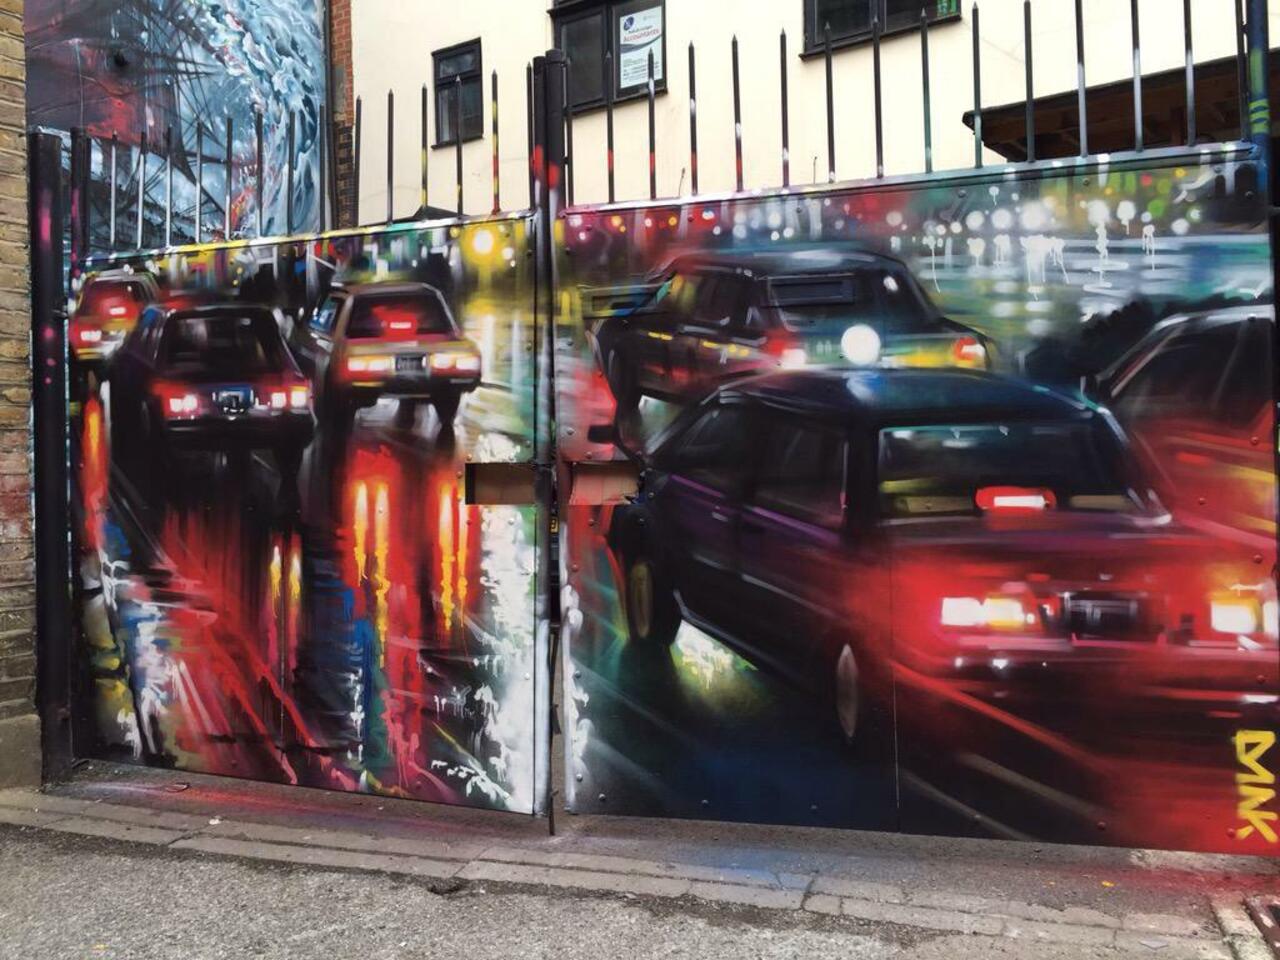 New Street Art by DanKitchener in Brick Lane London 

#art #graffiti #mural #streetart http://t.co/2fuEWXNw8E